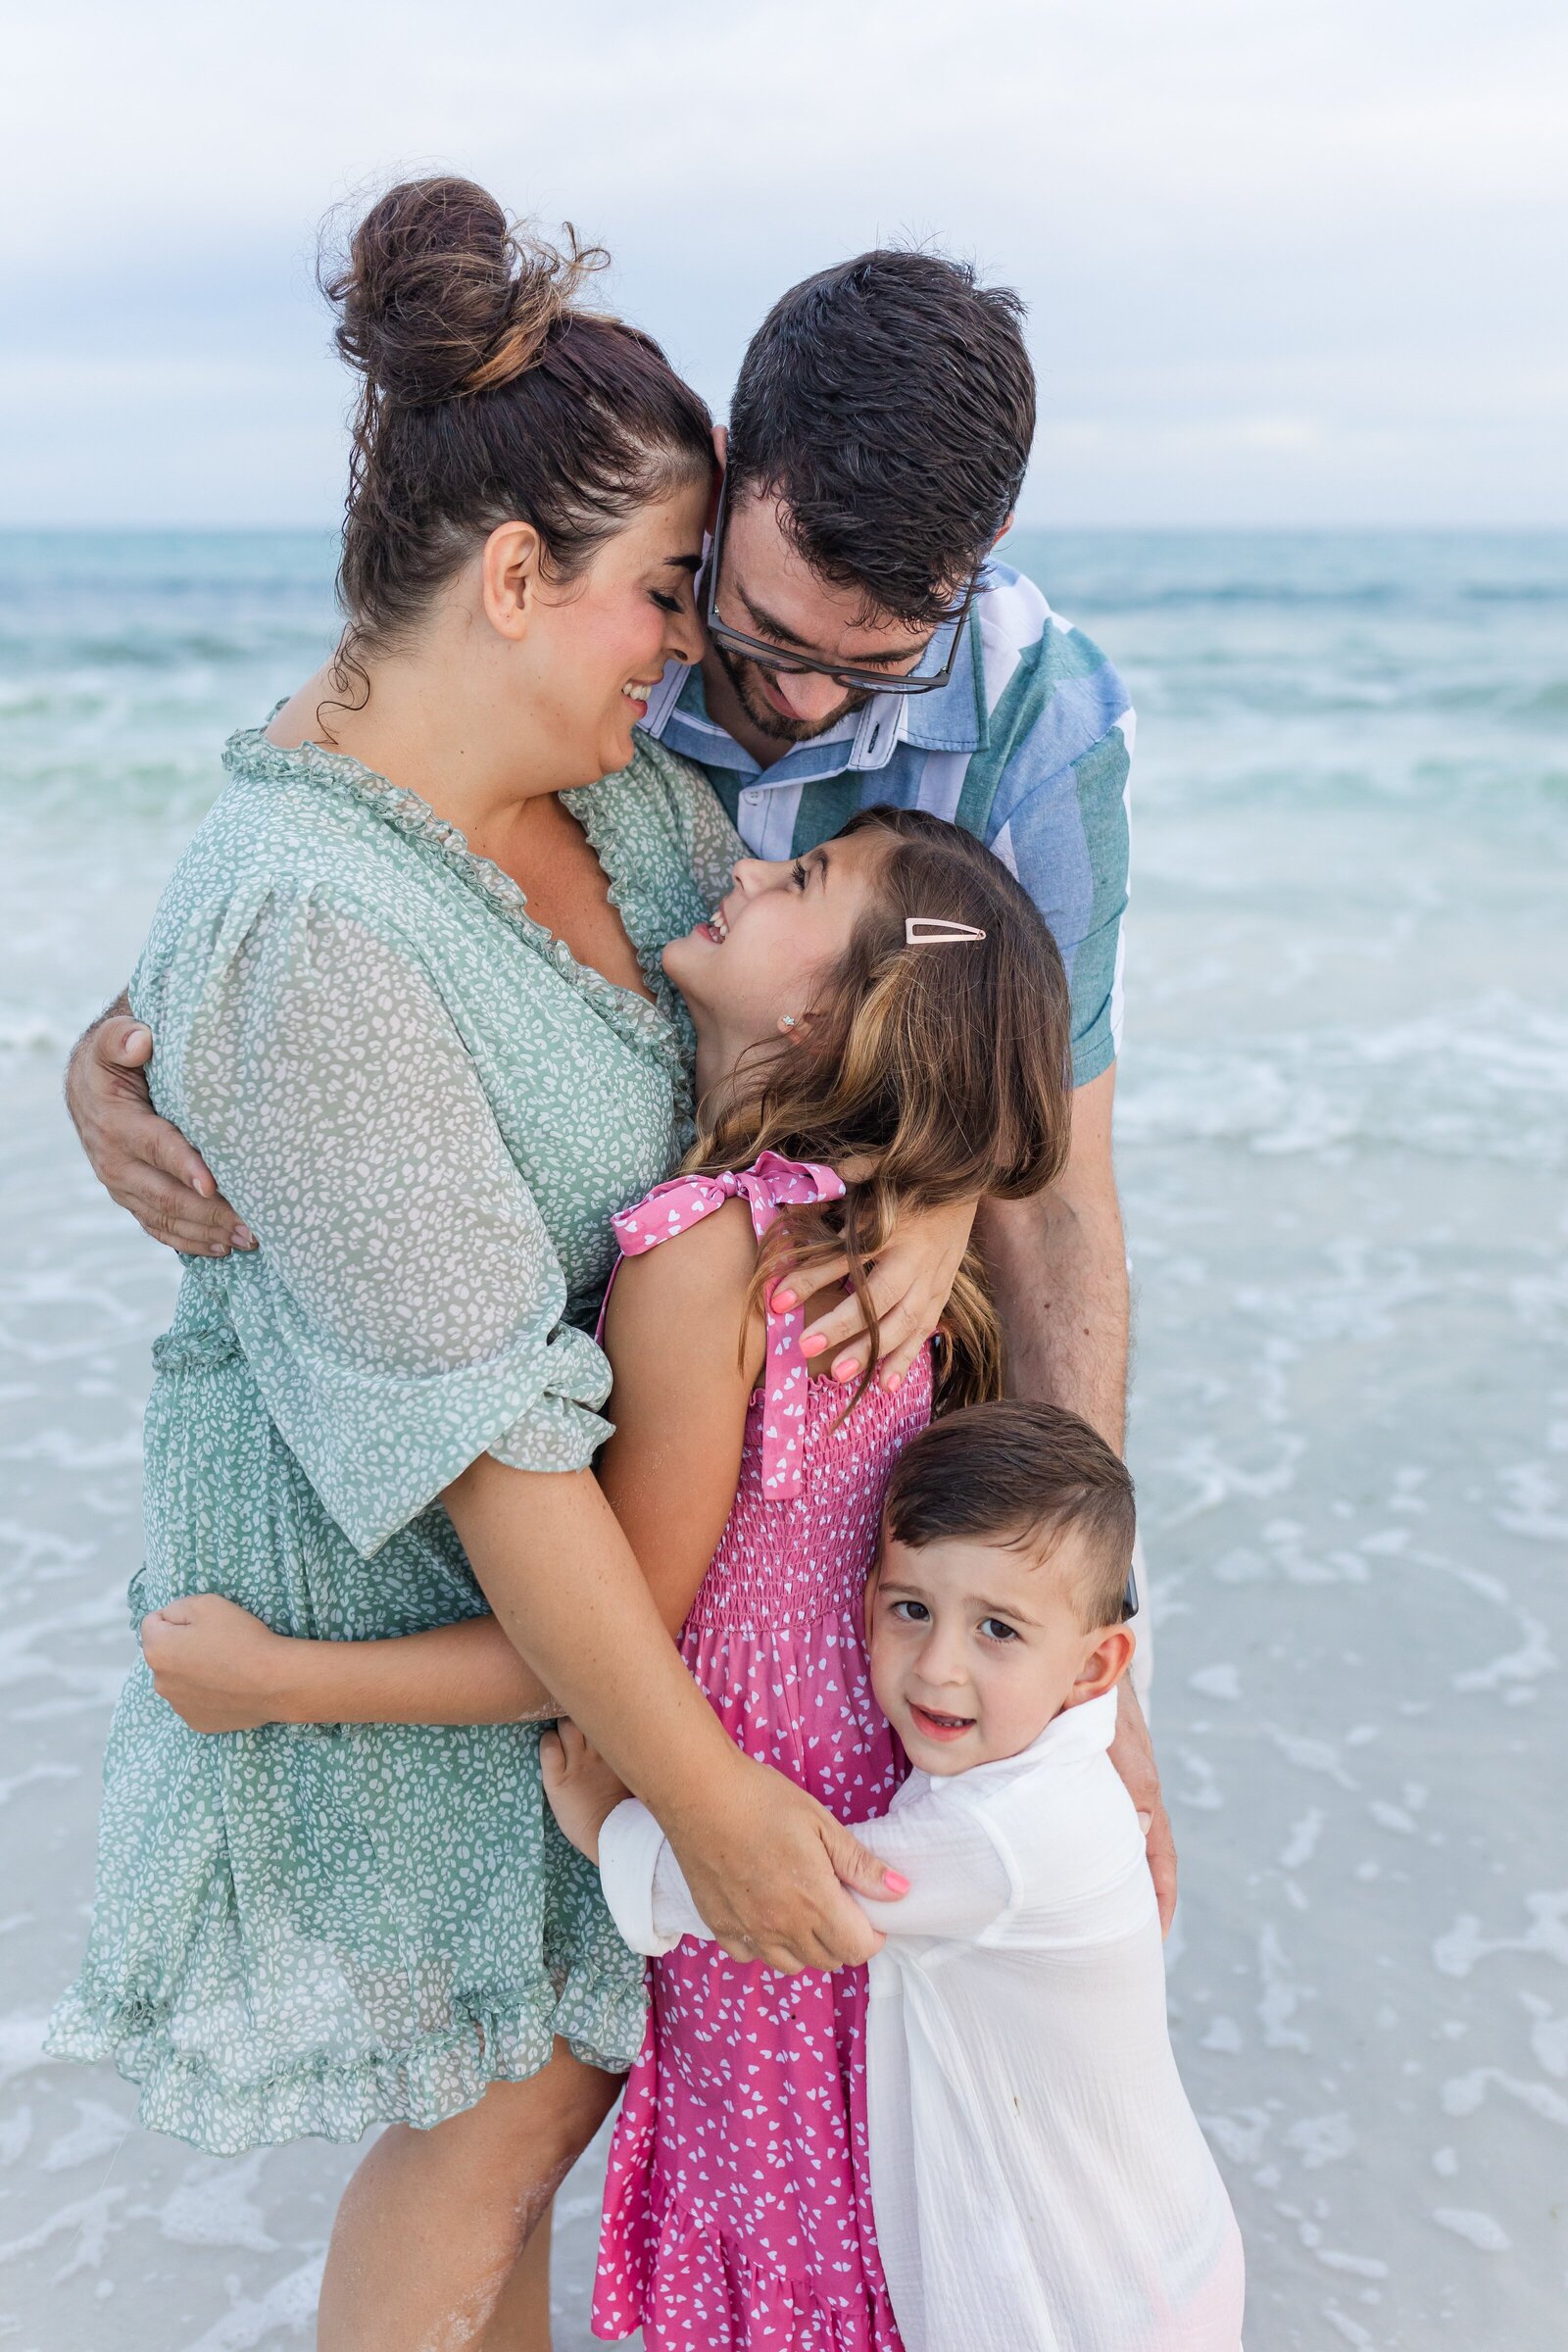 Pensacola Beach vacation family photo session .  Family group hug photo on the beach.